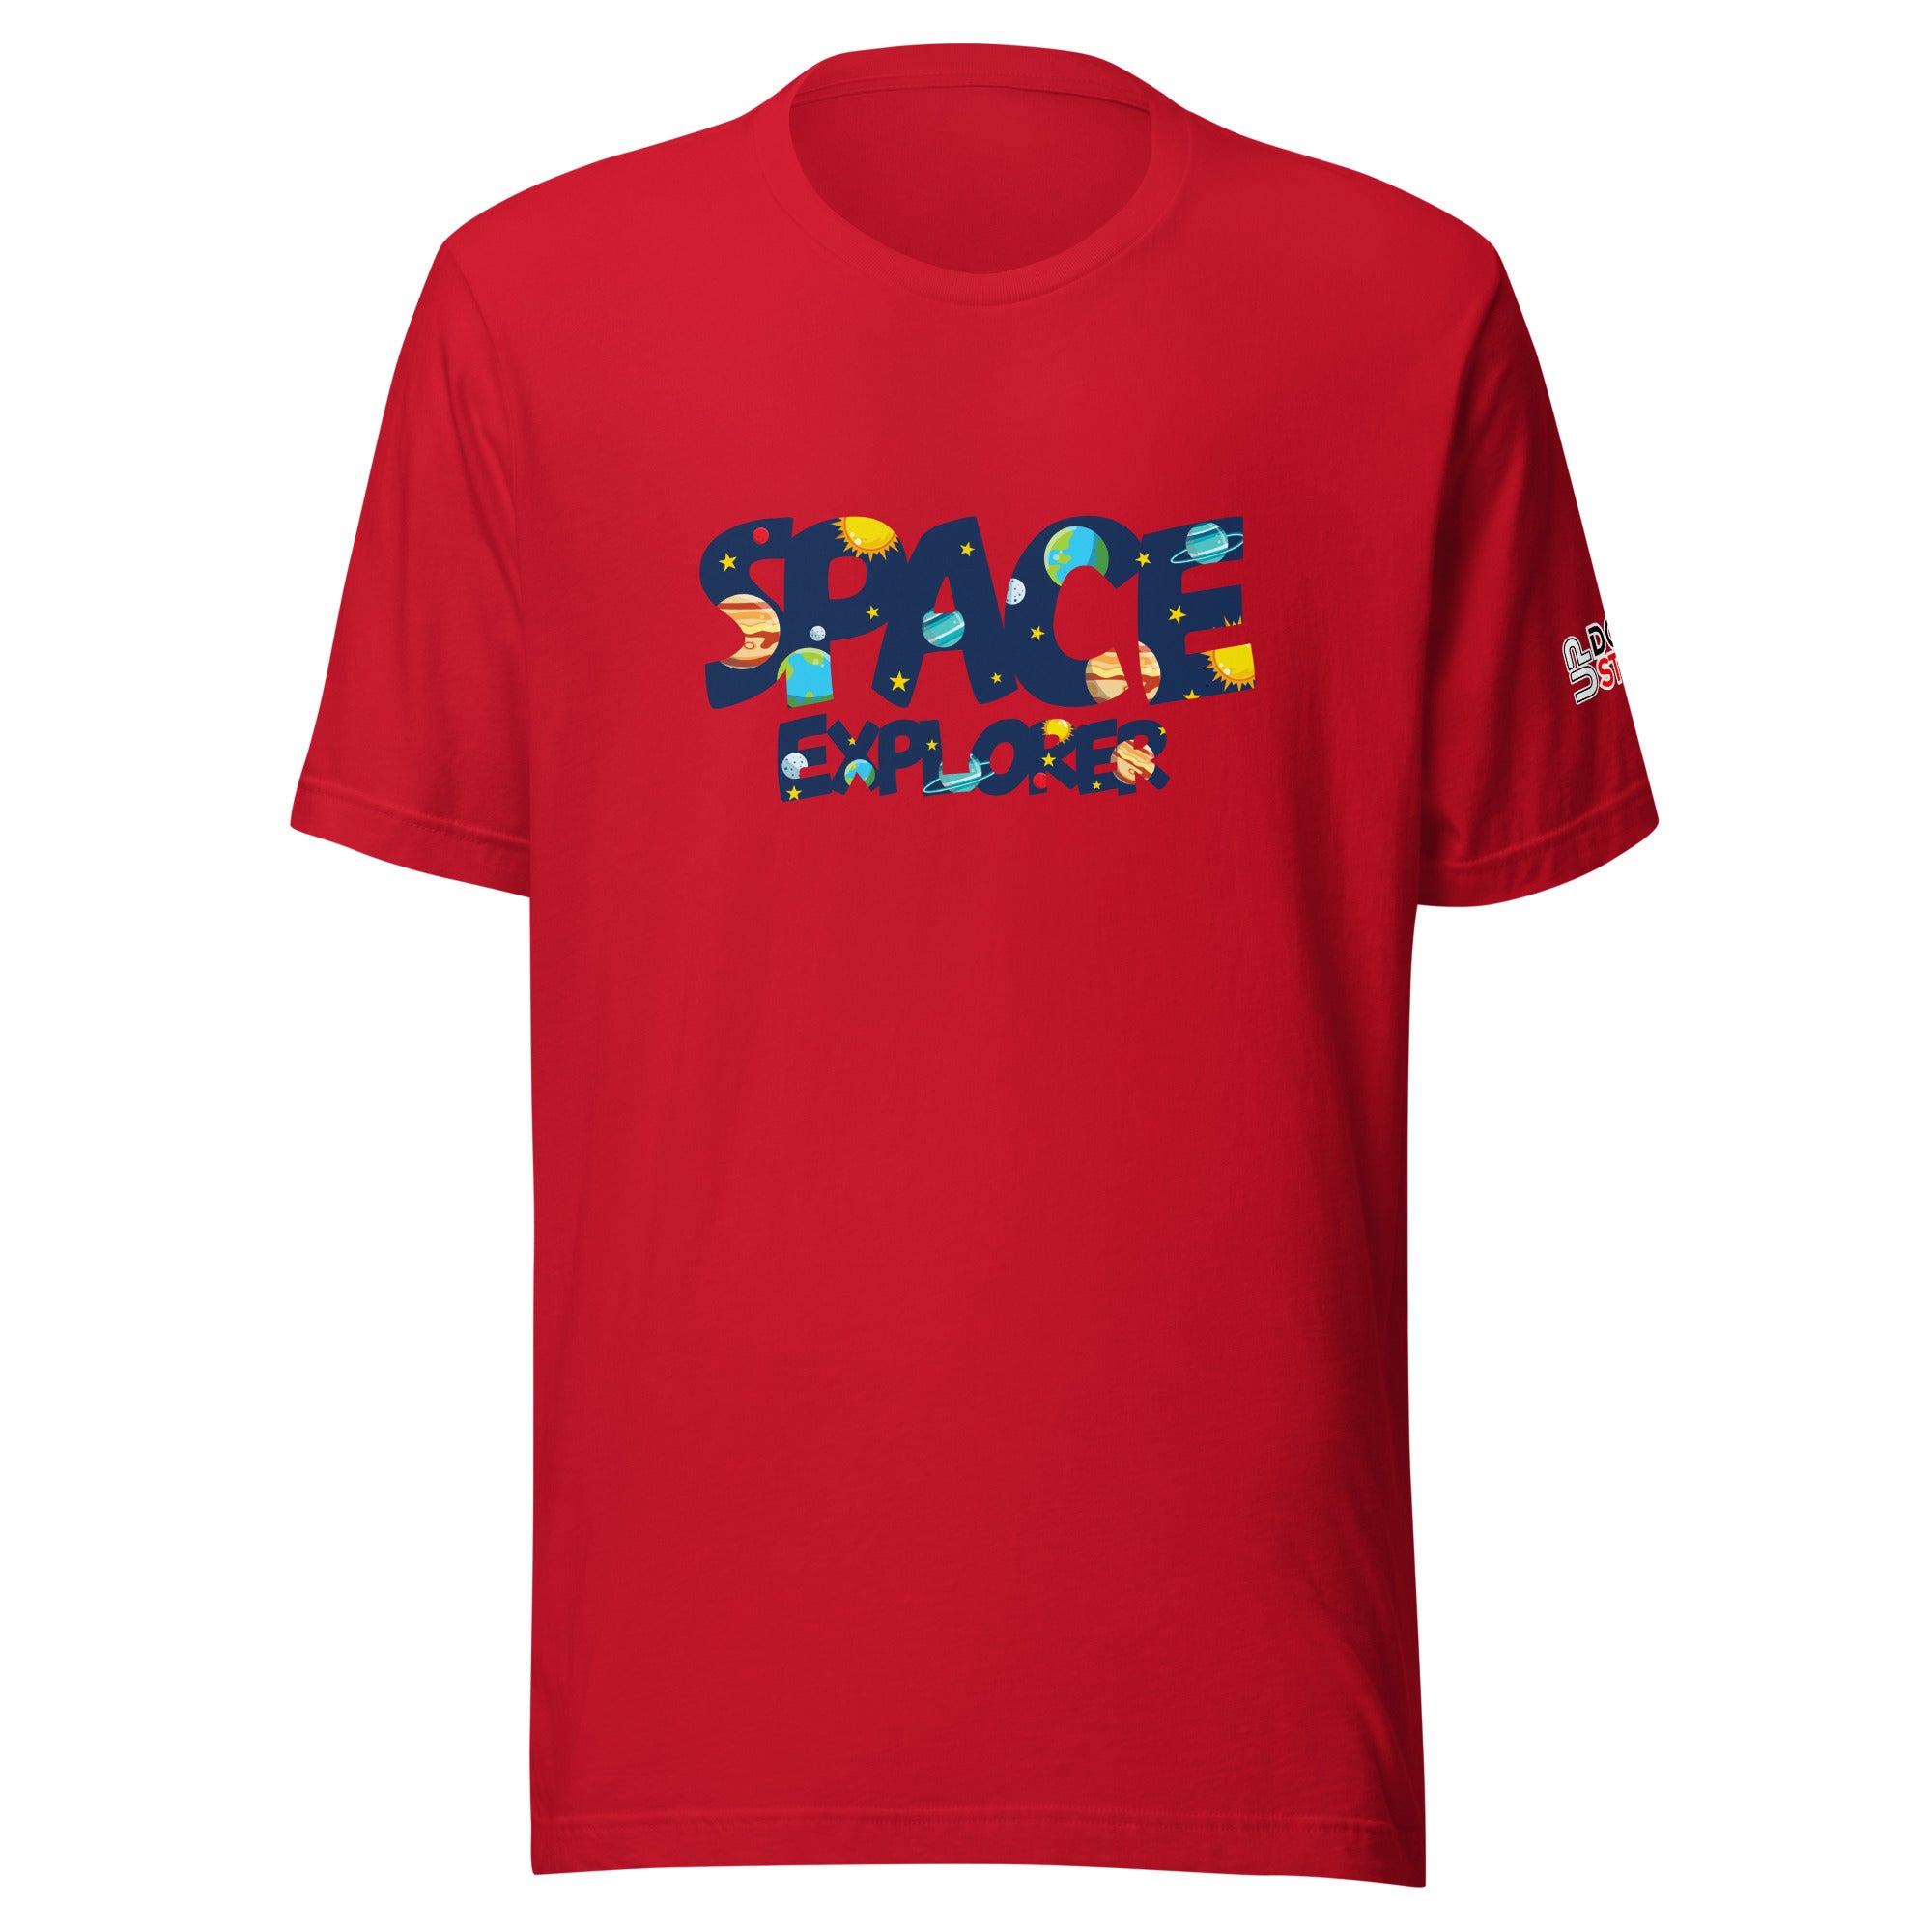 Space explorers / T-Shirt